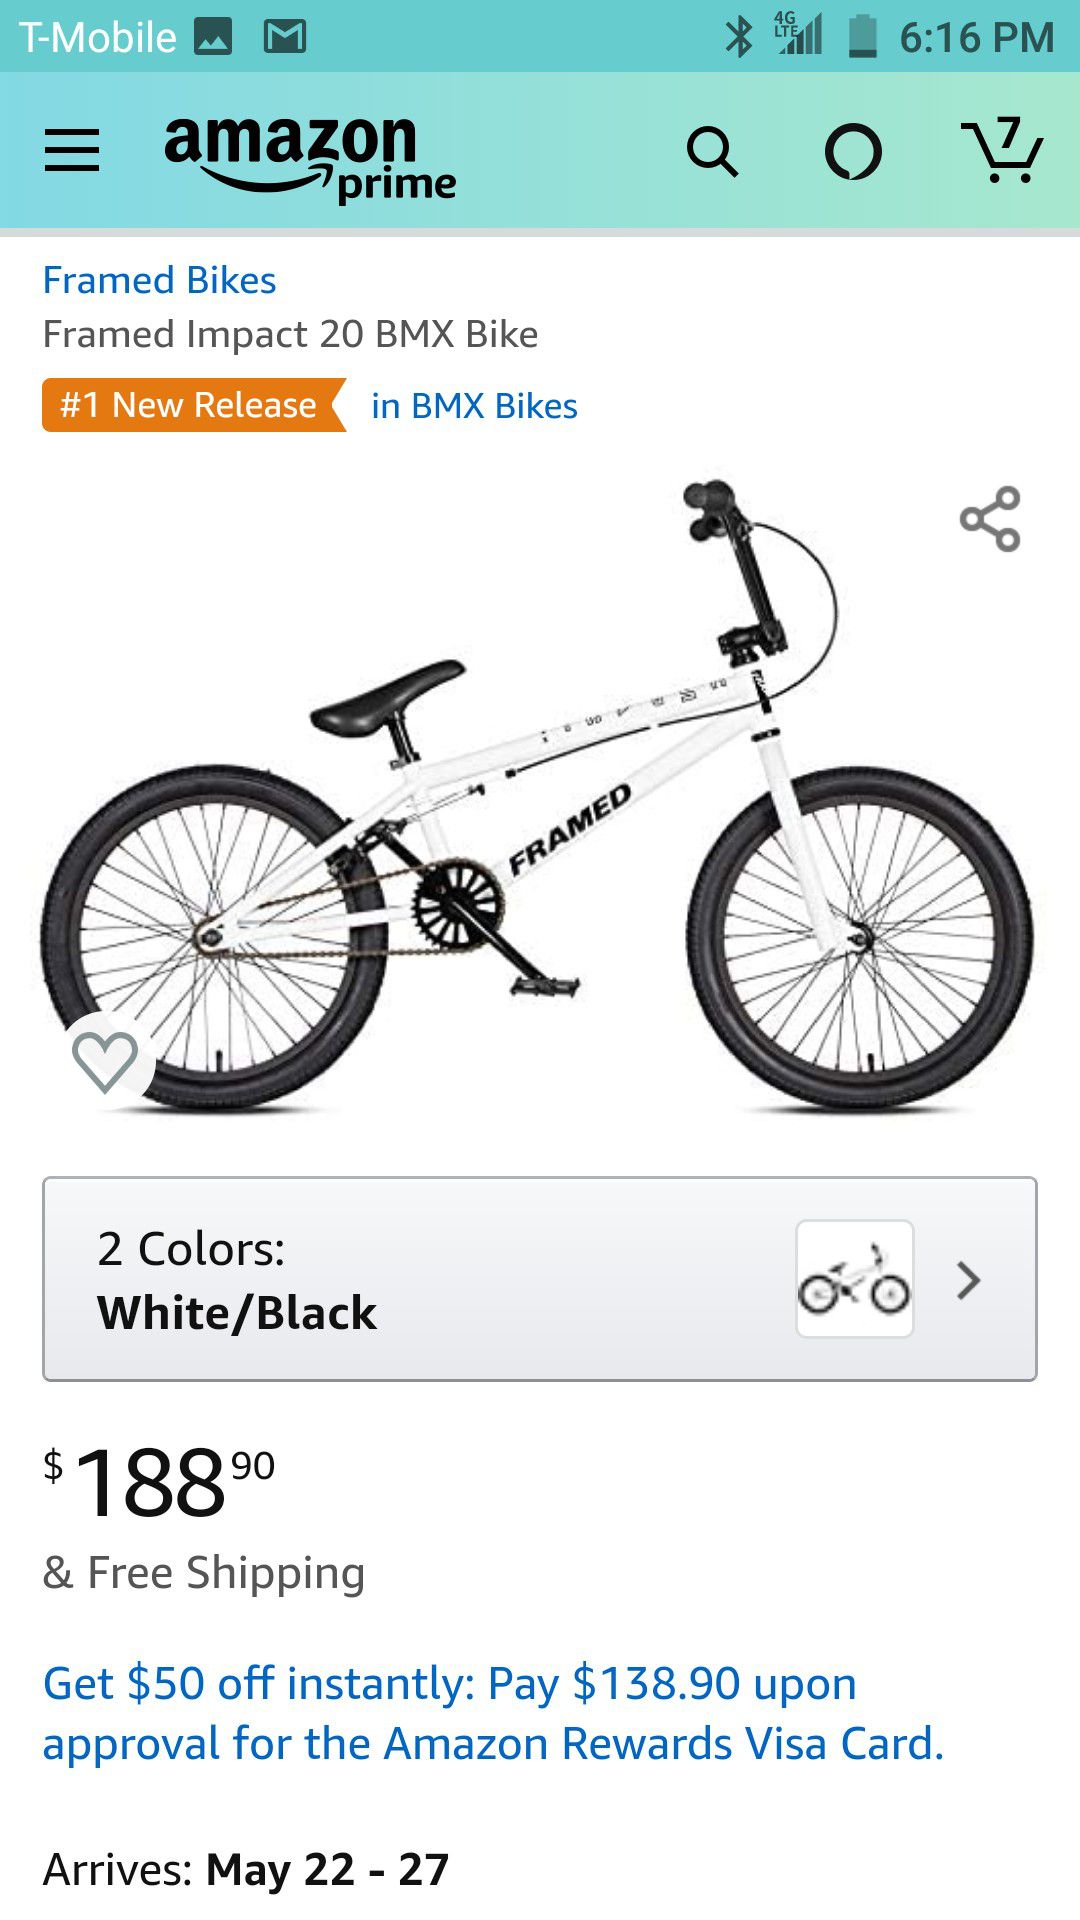 Brand new fully assembled Framed Impact BMX bike! $188.00 Pick up only!